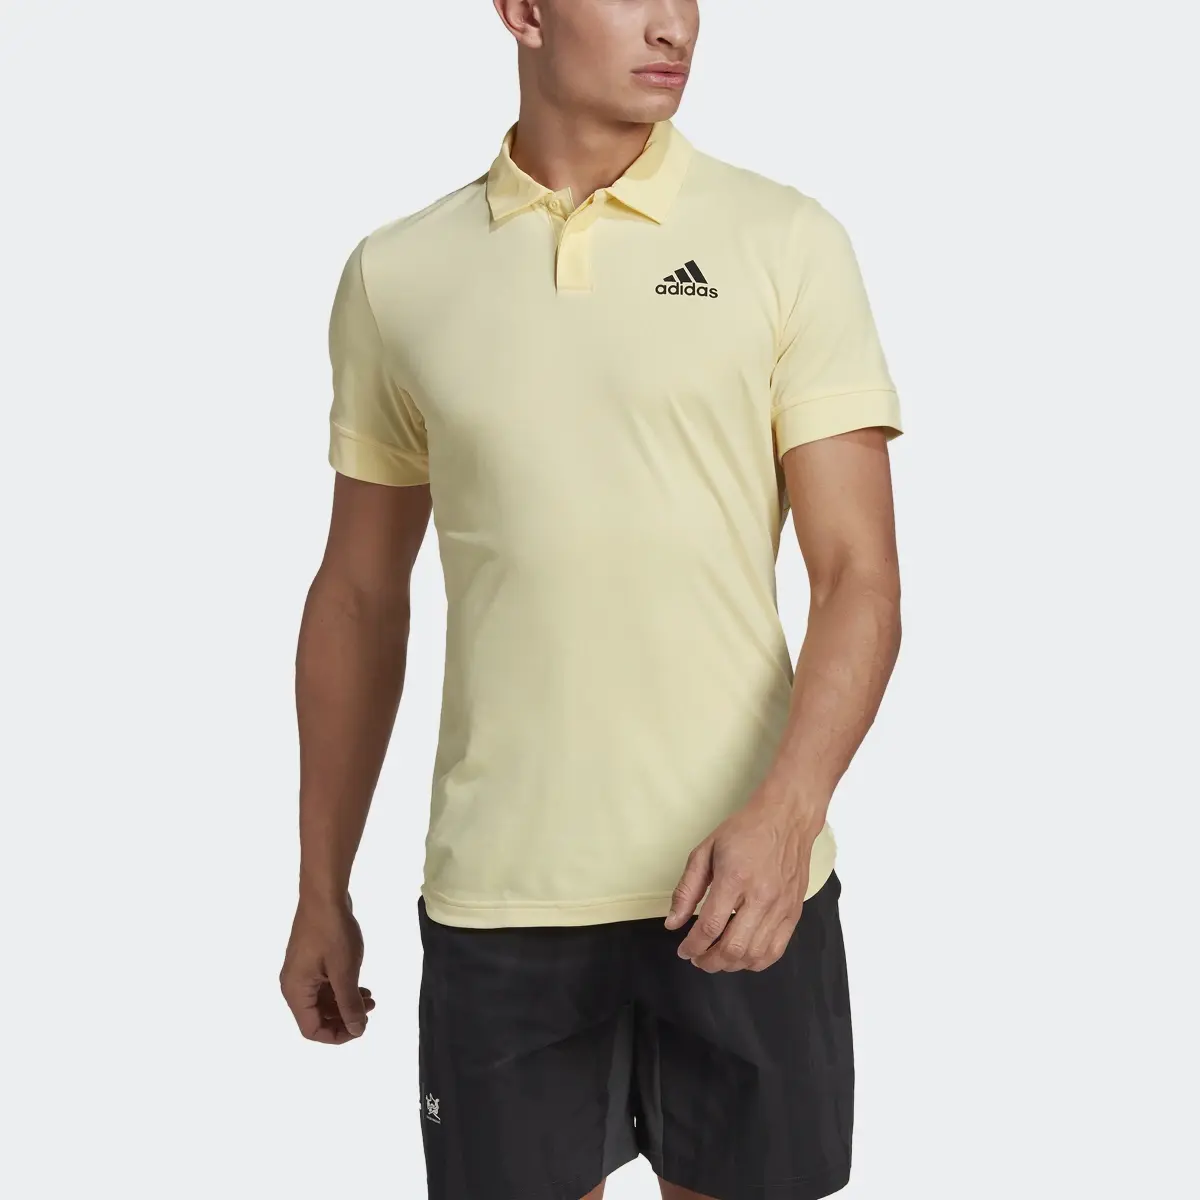 Adidas Tennis New York FreeLift Polo Shirt. 1